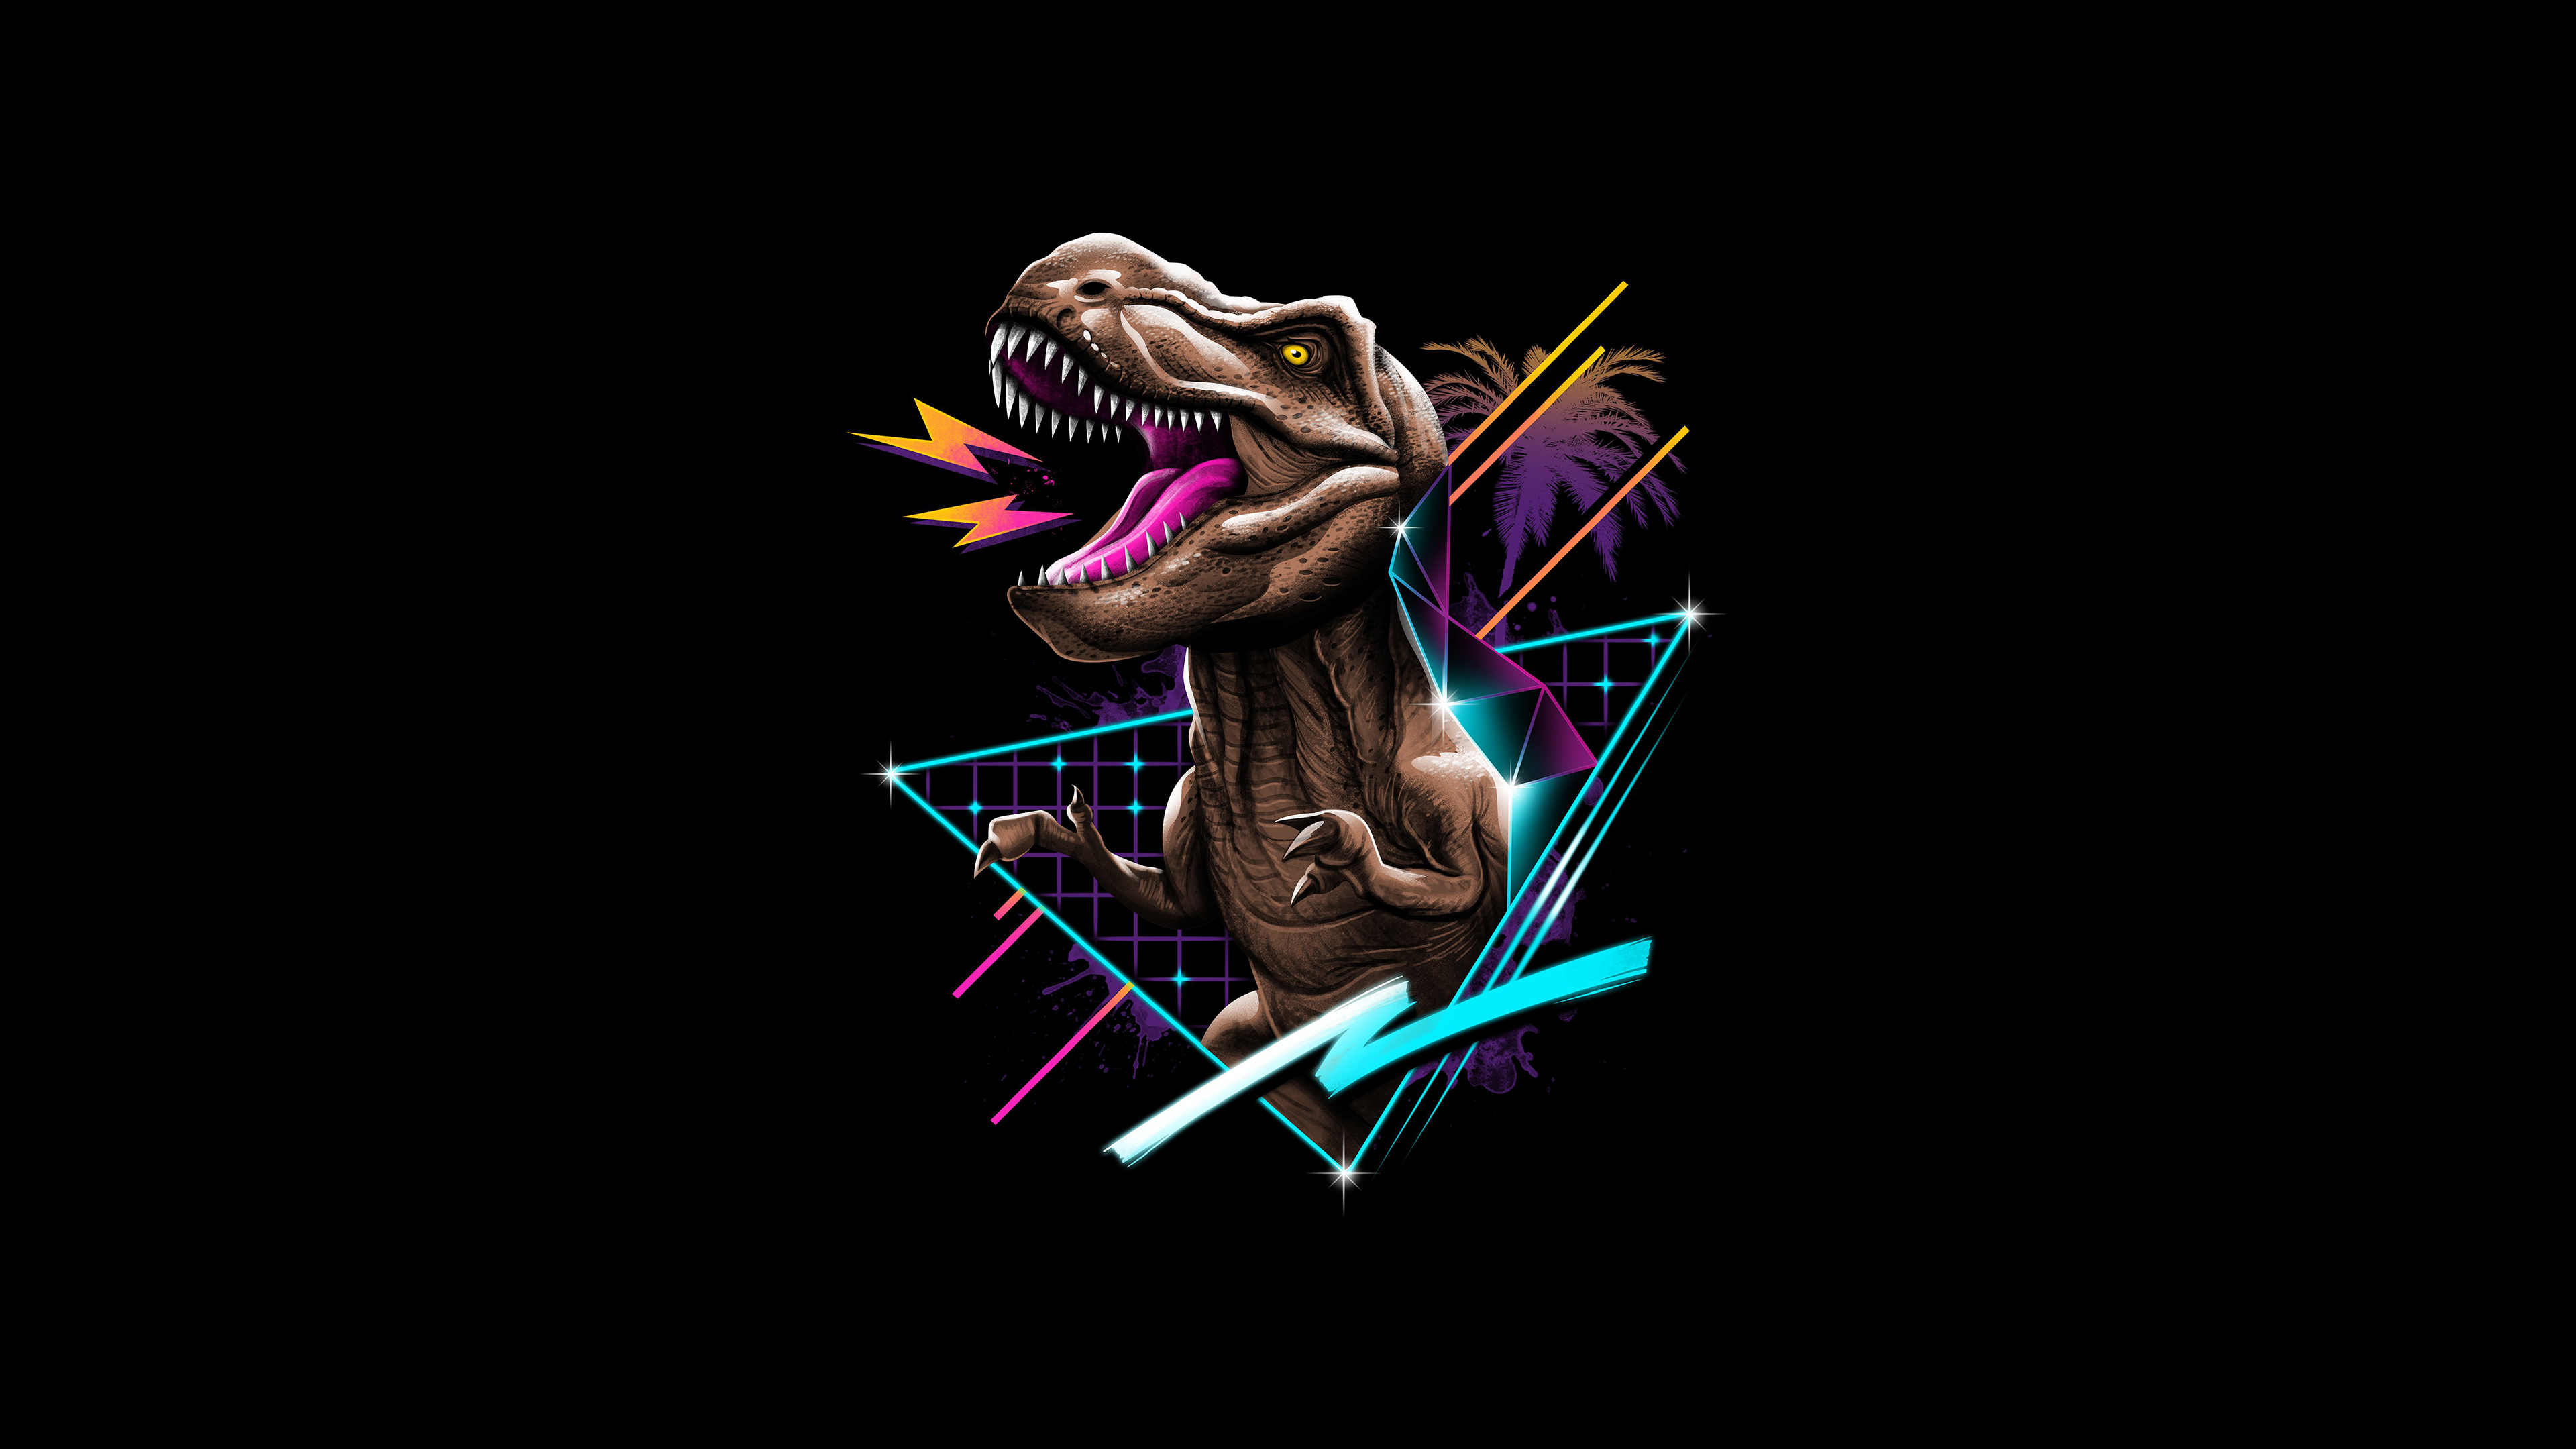 General 3840x2160 black dark background black background simple background digital art artwork illustration dinosaurs Tyrannosaurus rex retro style retrowave lights lines